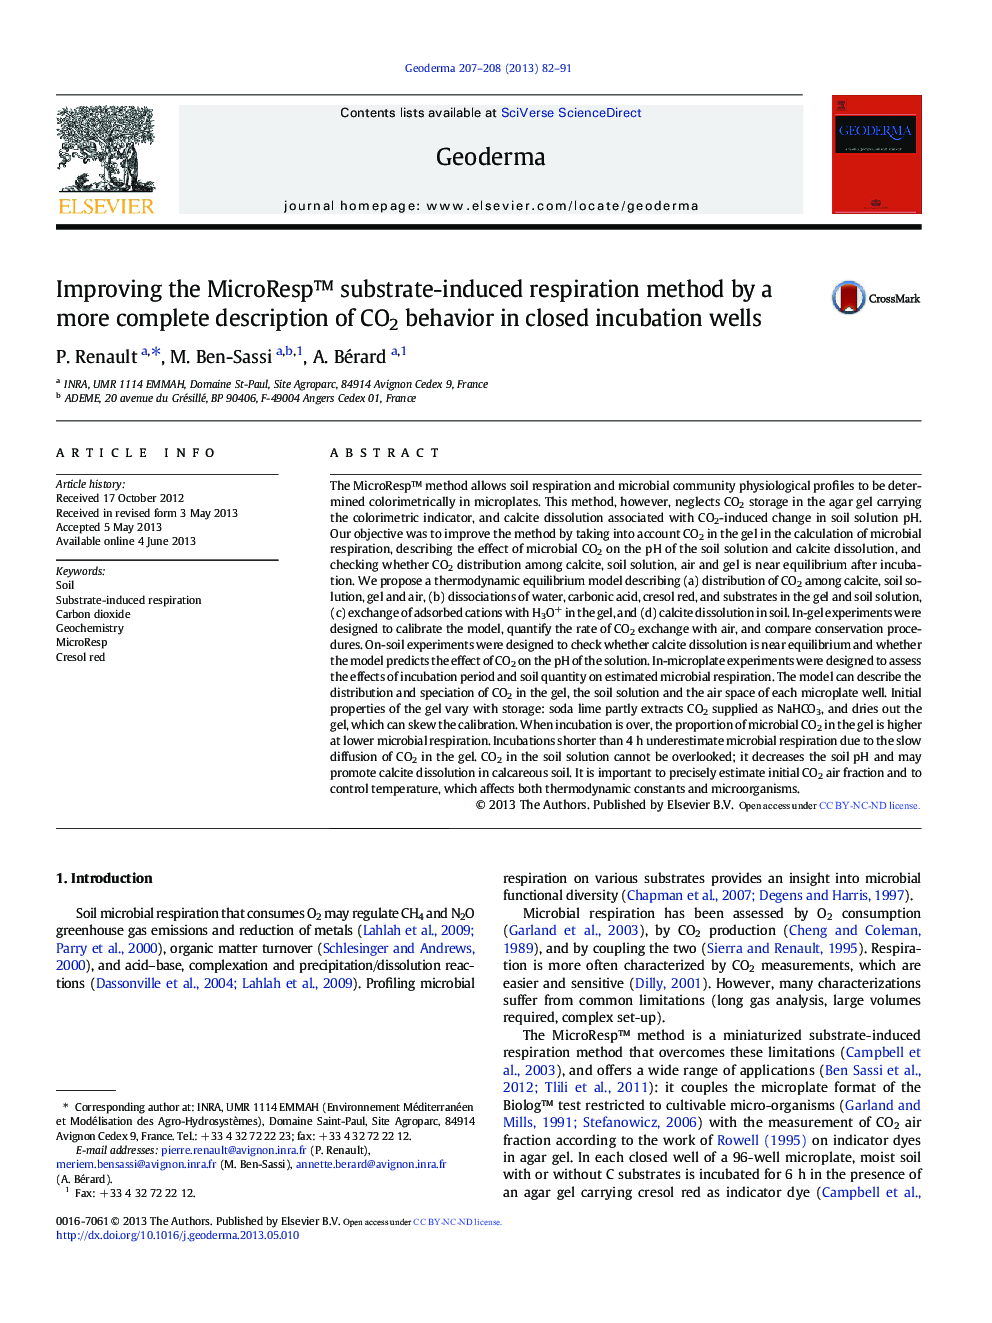 Improving the MicroRespâ¢ substrate-induced respiration method by a more complete description of CO2 behavior in closed incubation wells